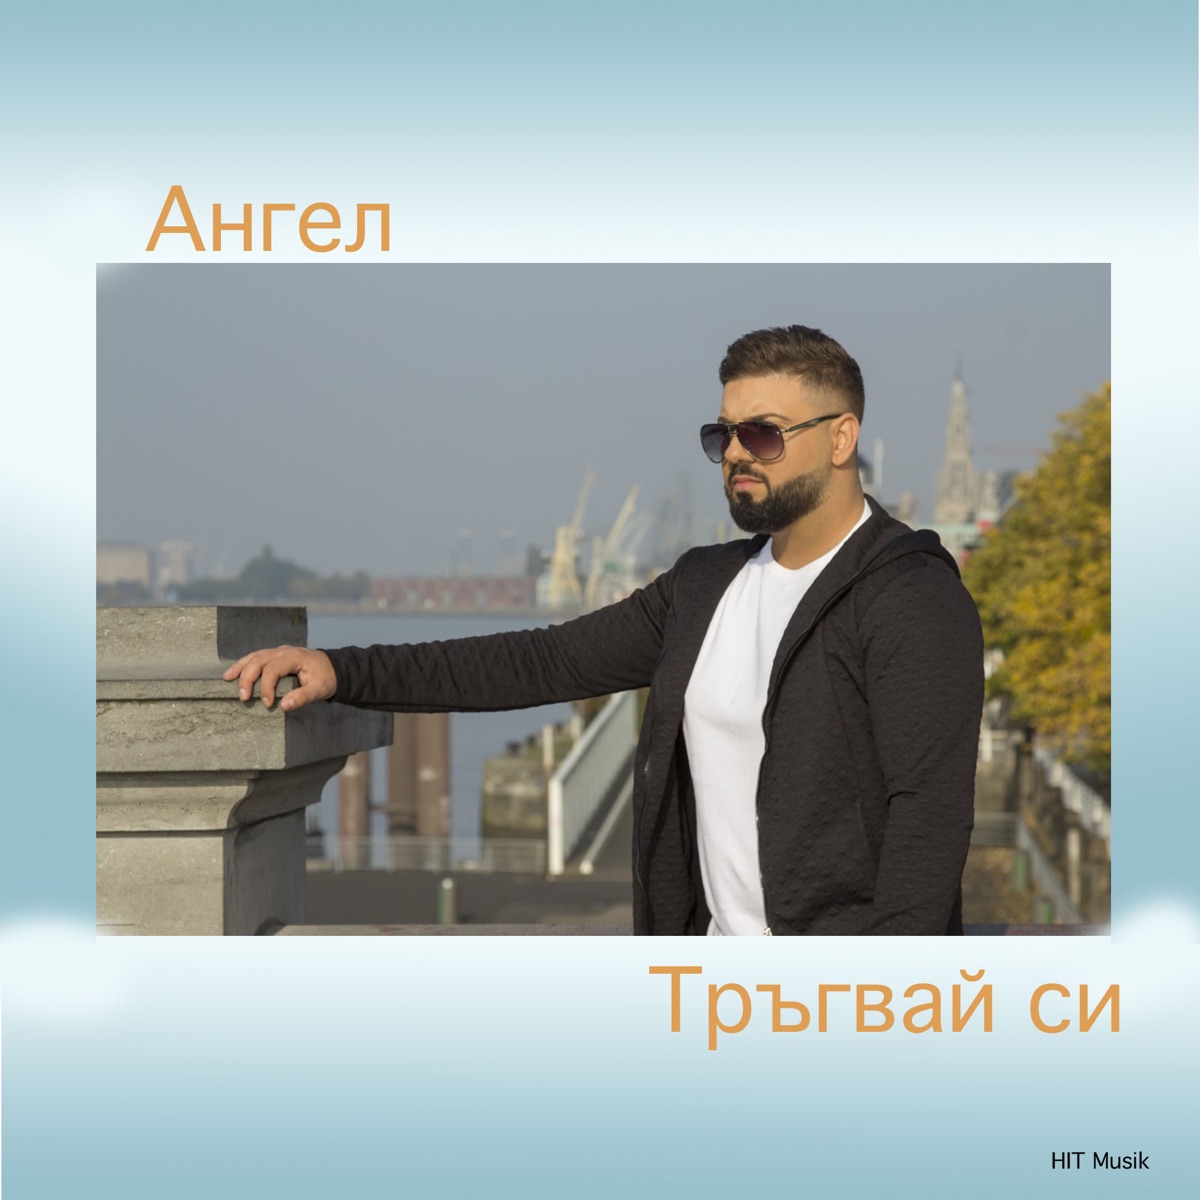 Кво Става Брат - Single by Ангел & Сузанита on Apple Music